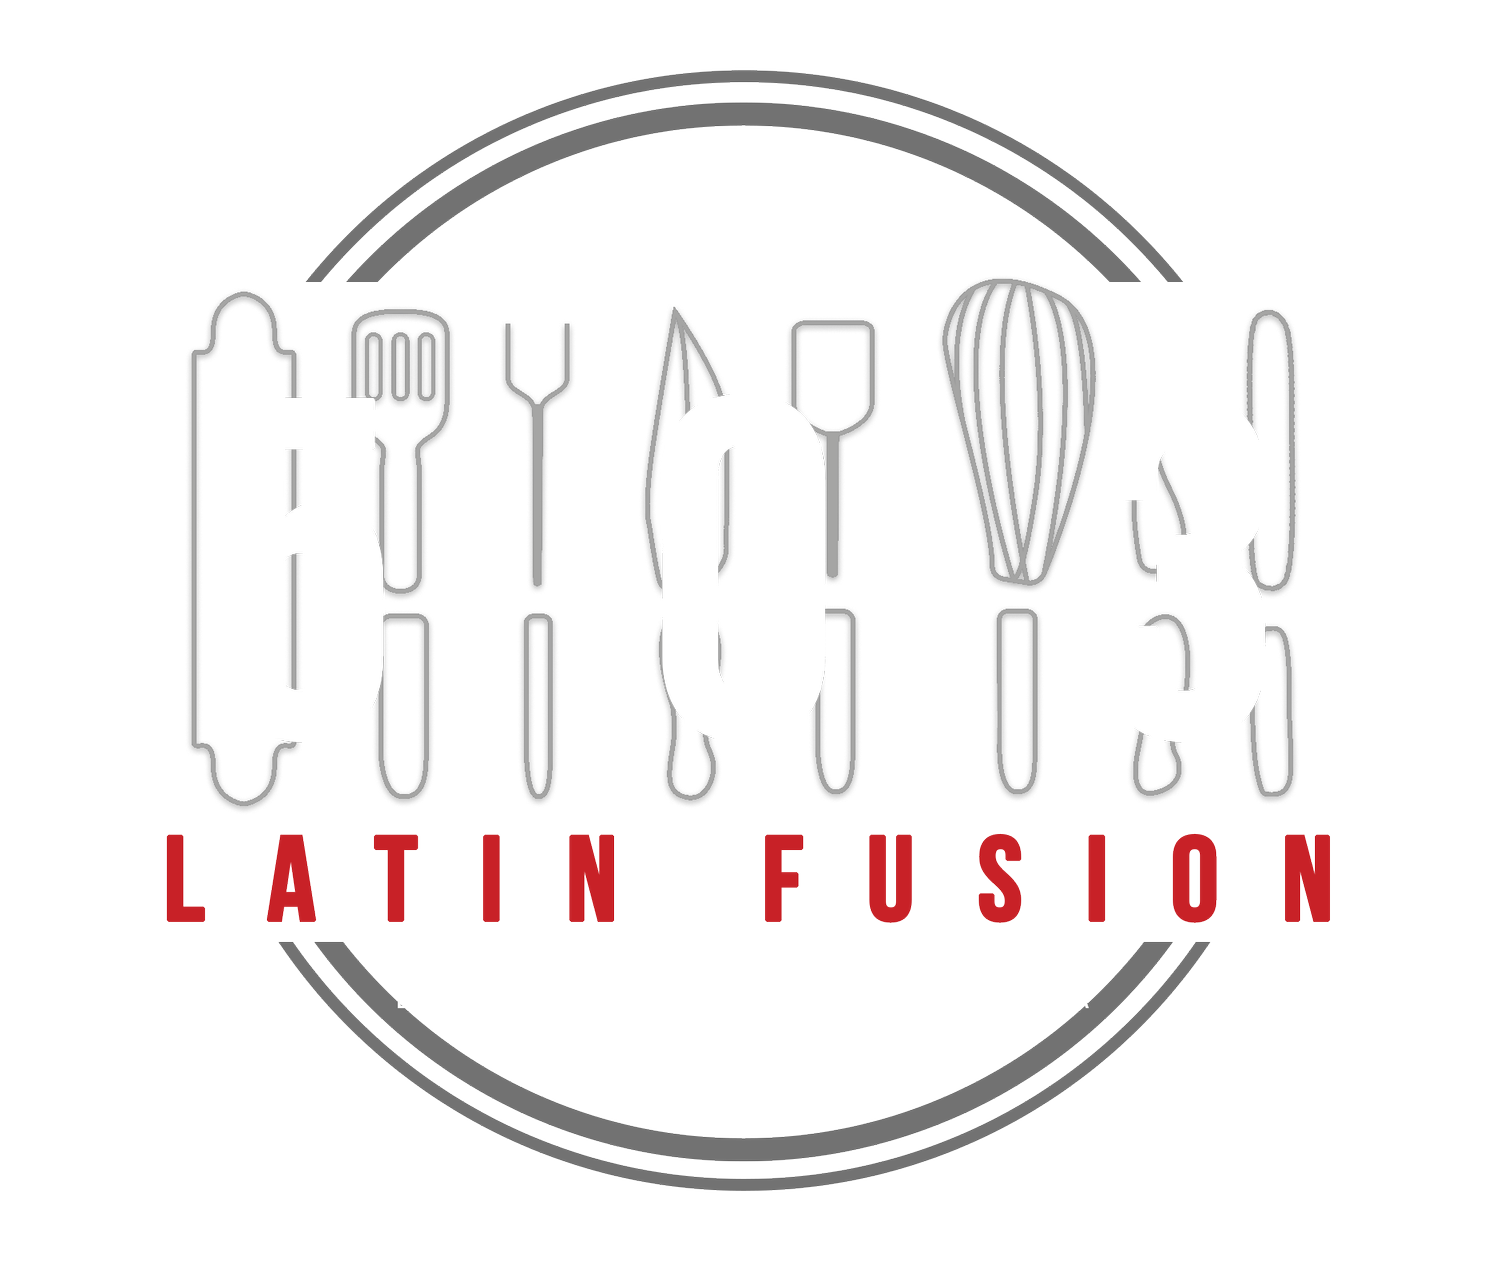 503.latinfusion